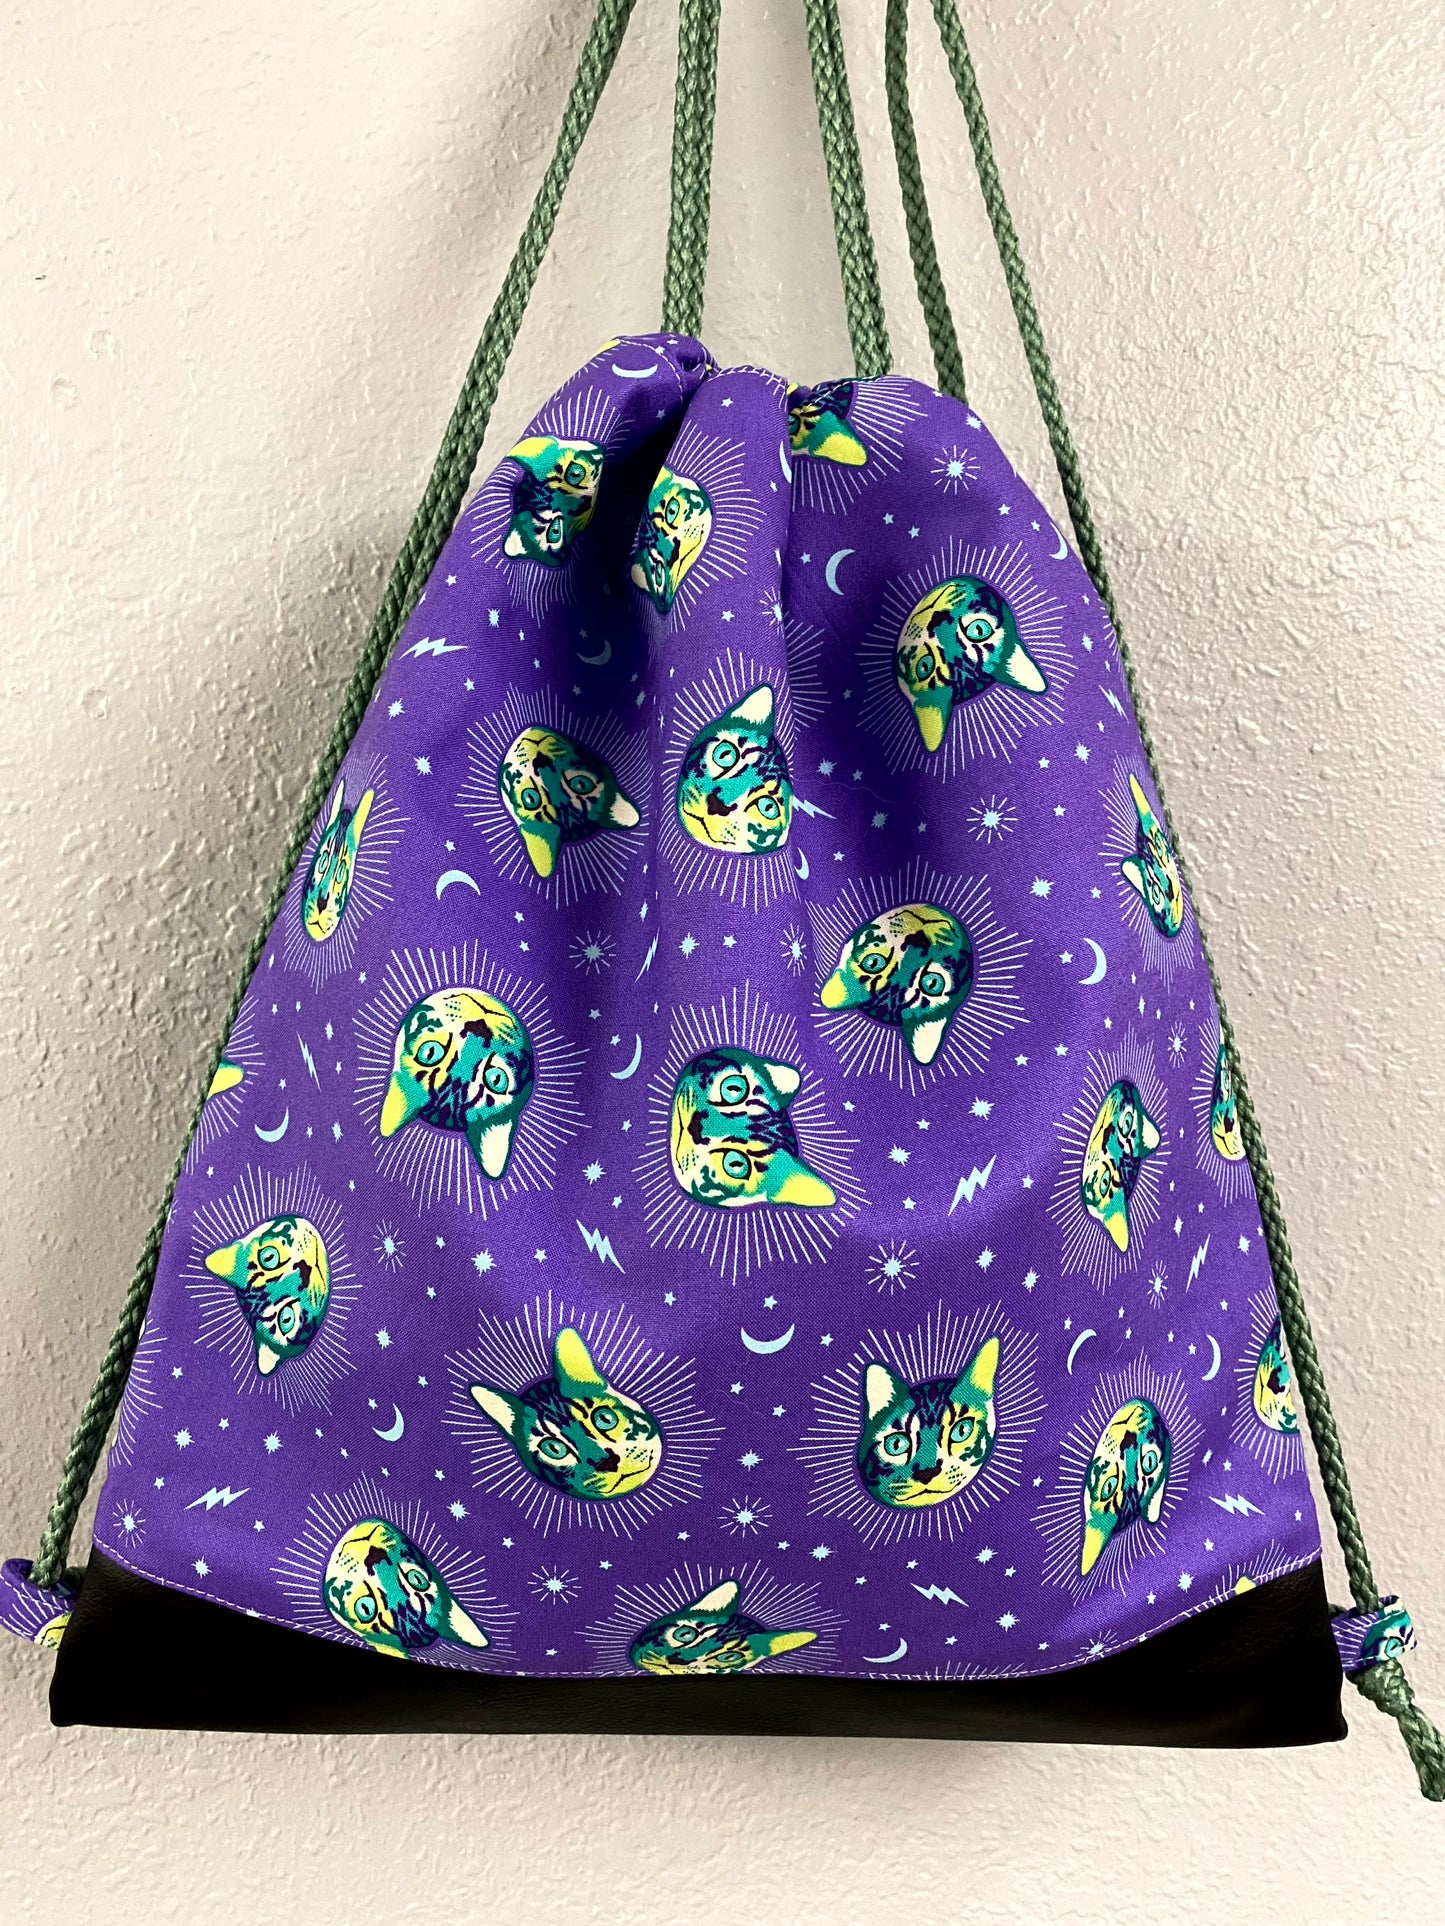 Cat Drawstring Bag - Handmade Drawstring Bag – Drawstring Backpack - On the Go Bag - Overnight Bag